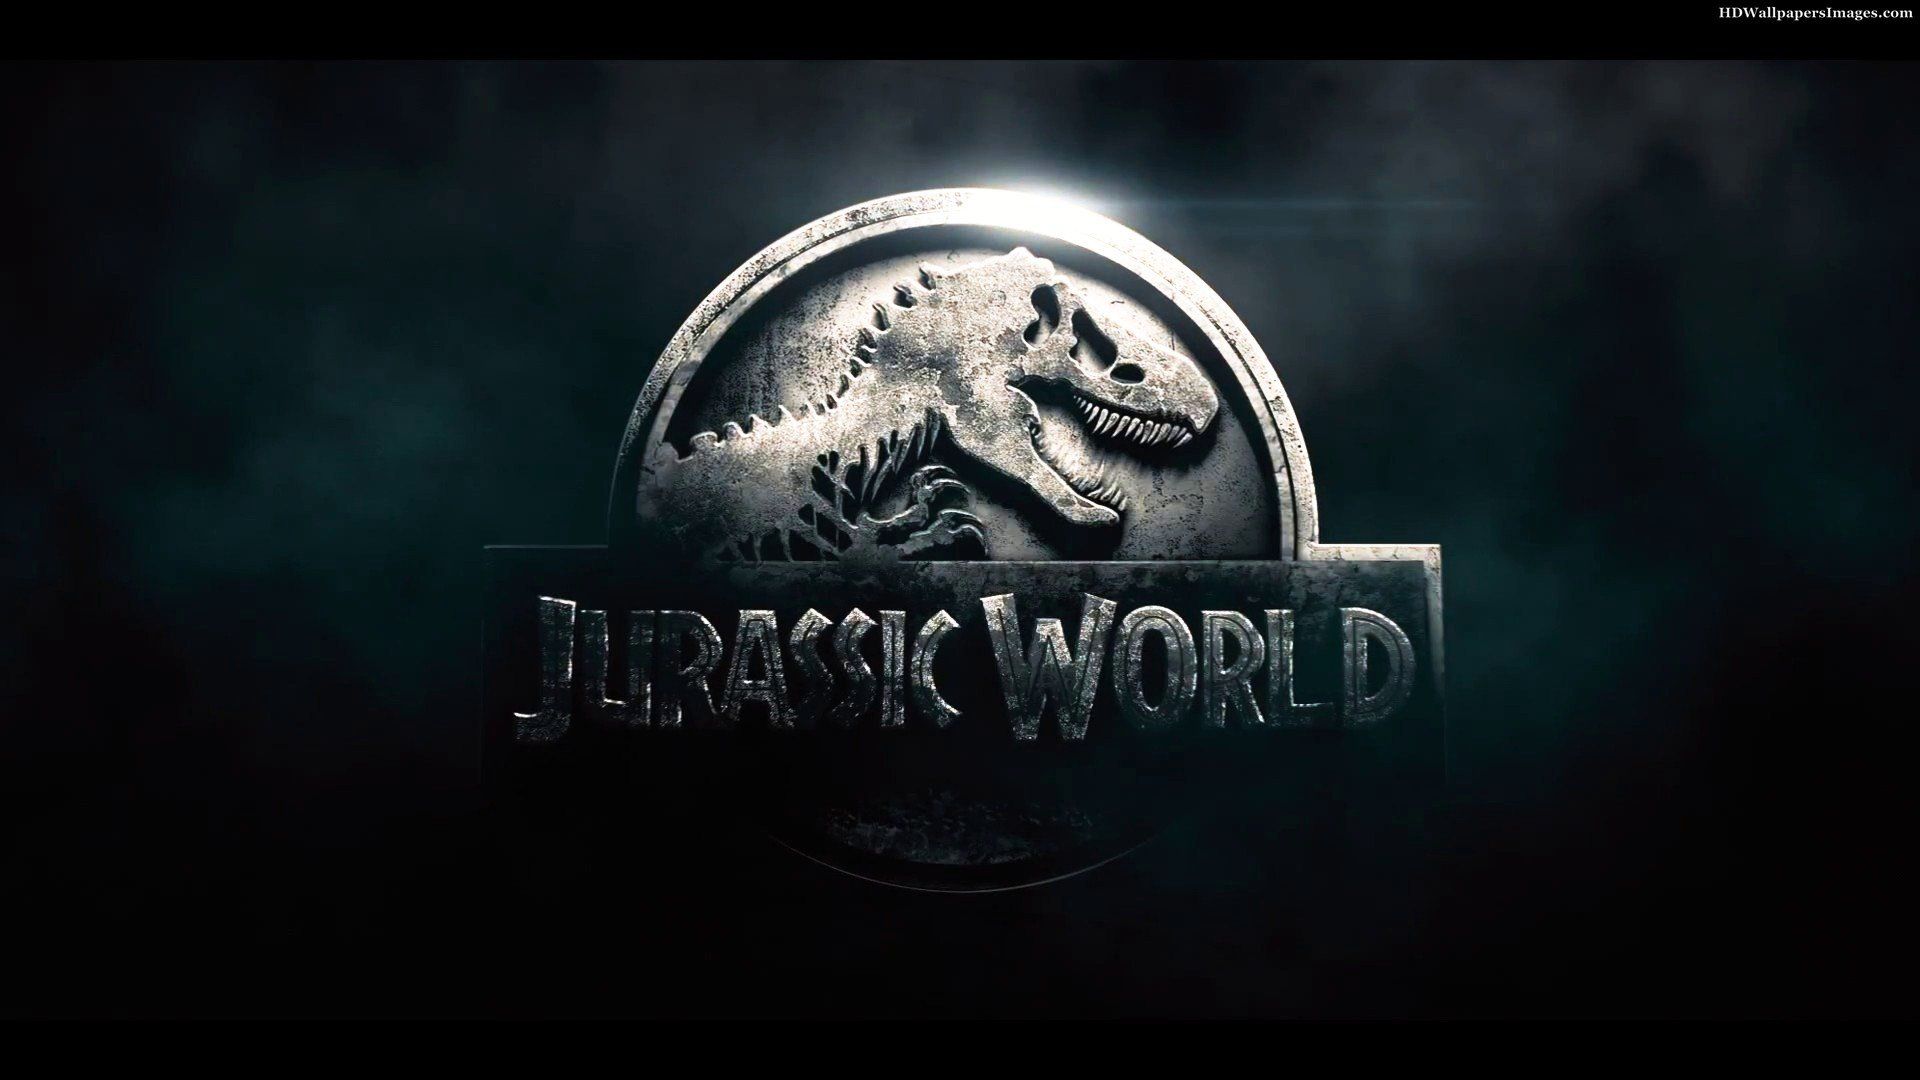 Free download Jurassic World Logo Image [1920x1080] for your Desktop, Mobile & Tablet. Explore Jurassic World Wallpaper. Jurassic Park Wallpaper